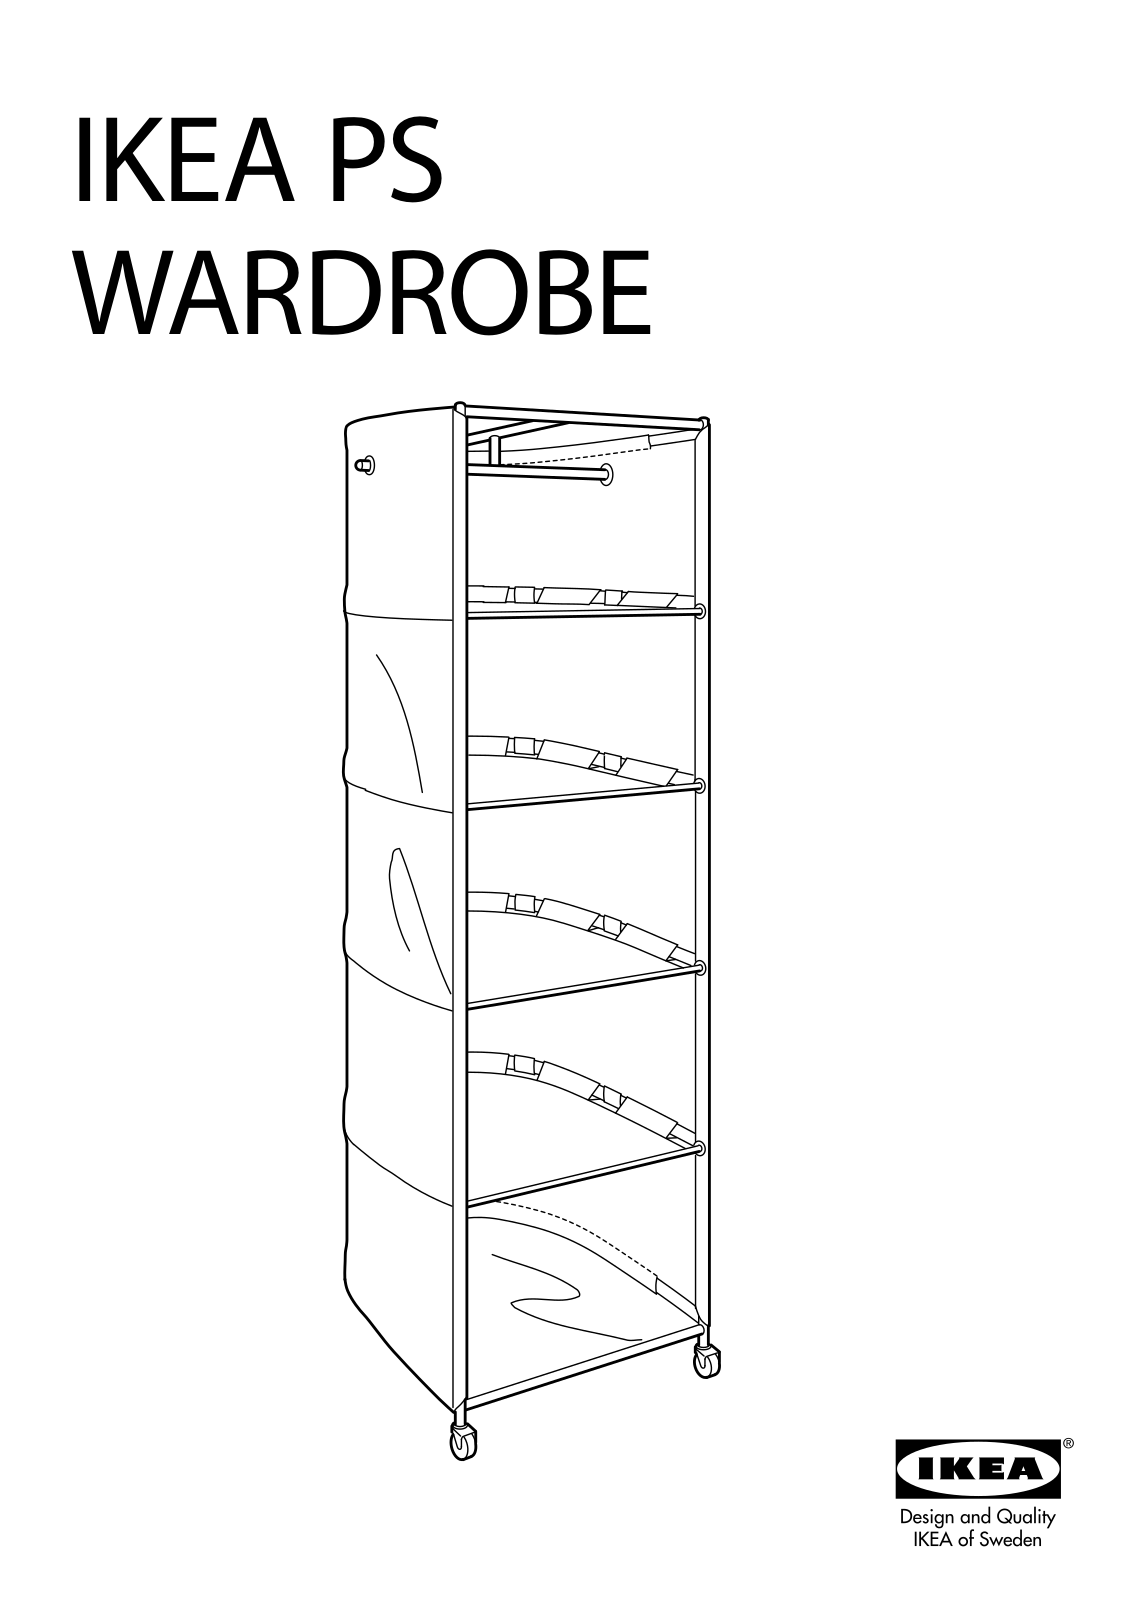 IKEA PS User Manual